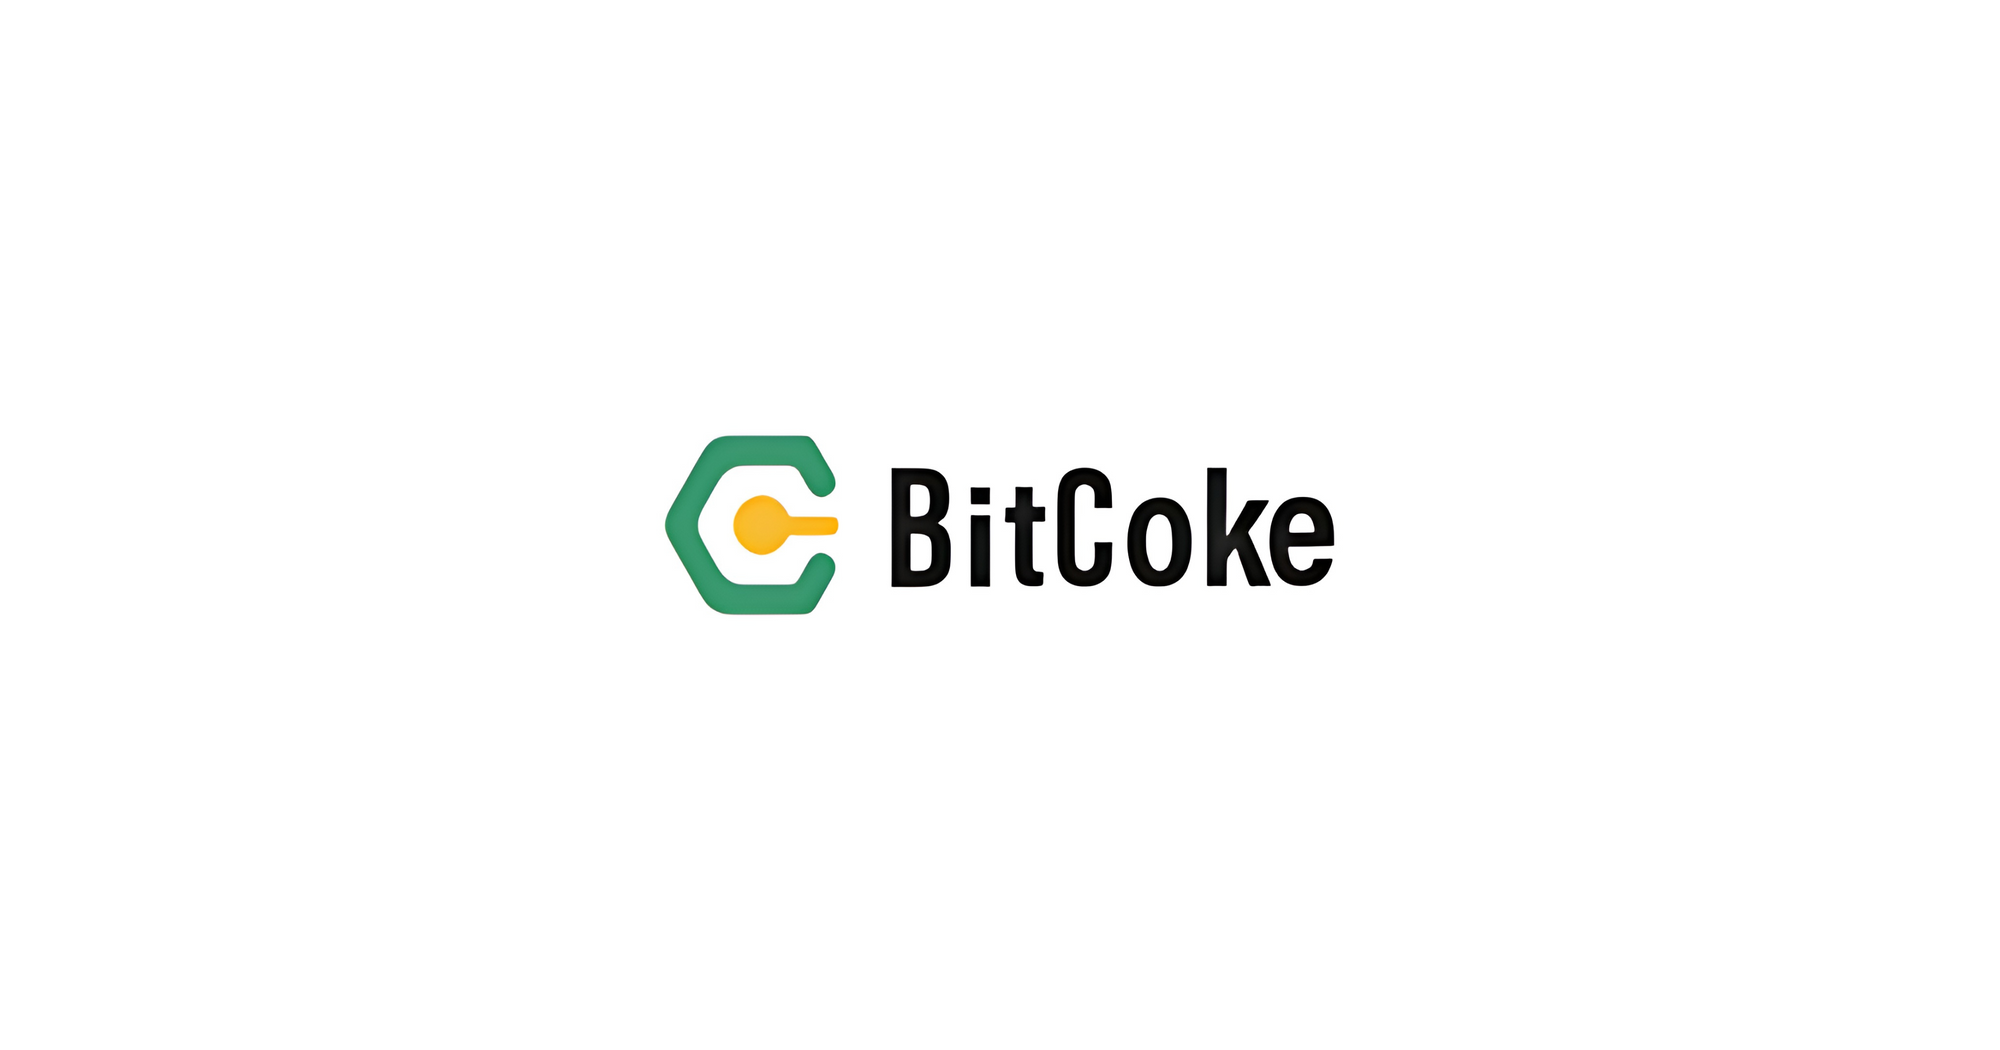 BitCoke